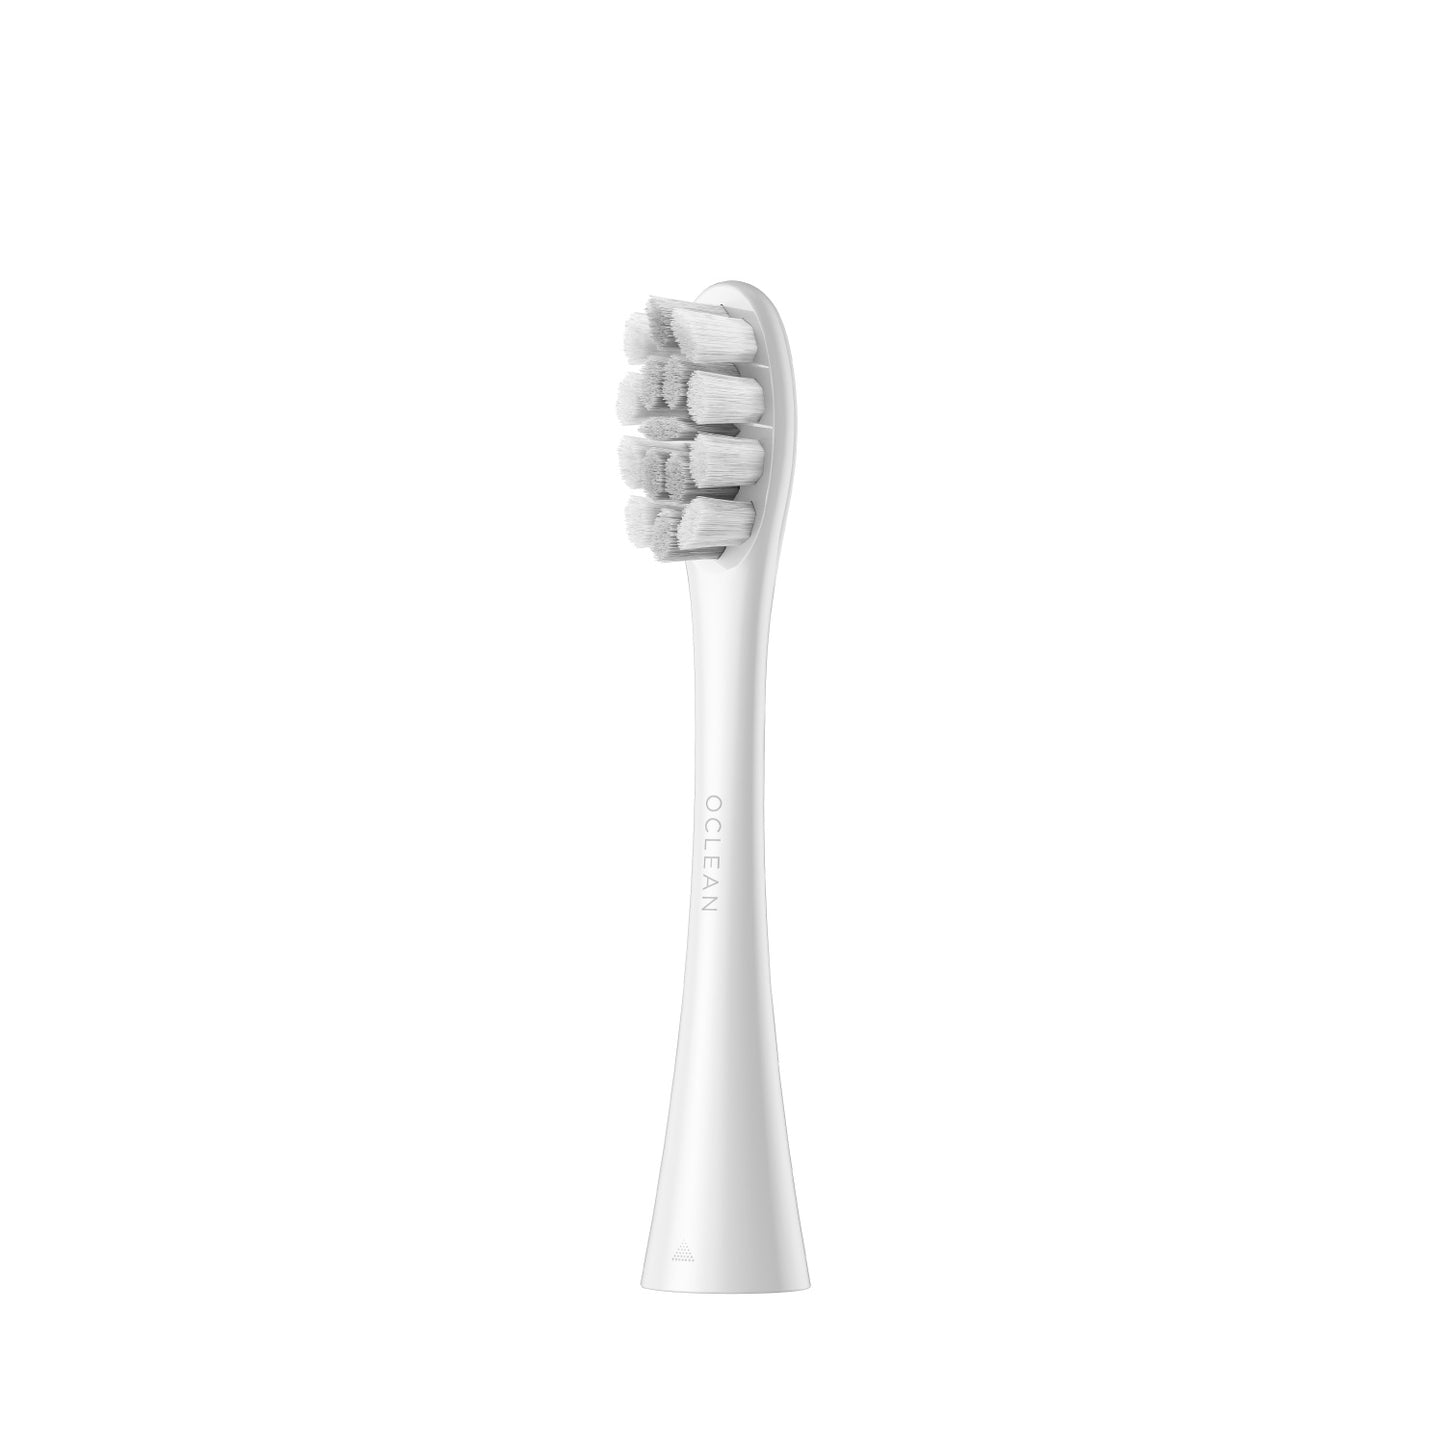 Oclean Brush Heads Refills-Toothbrush Replacement Heads-Oclean Global Store